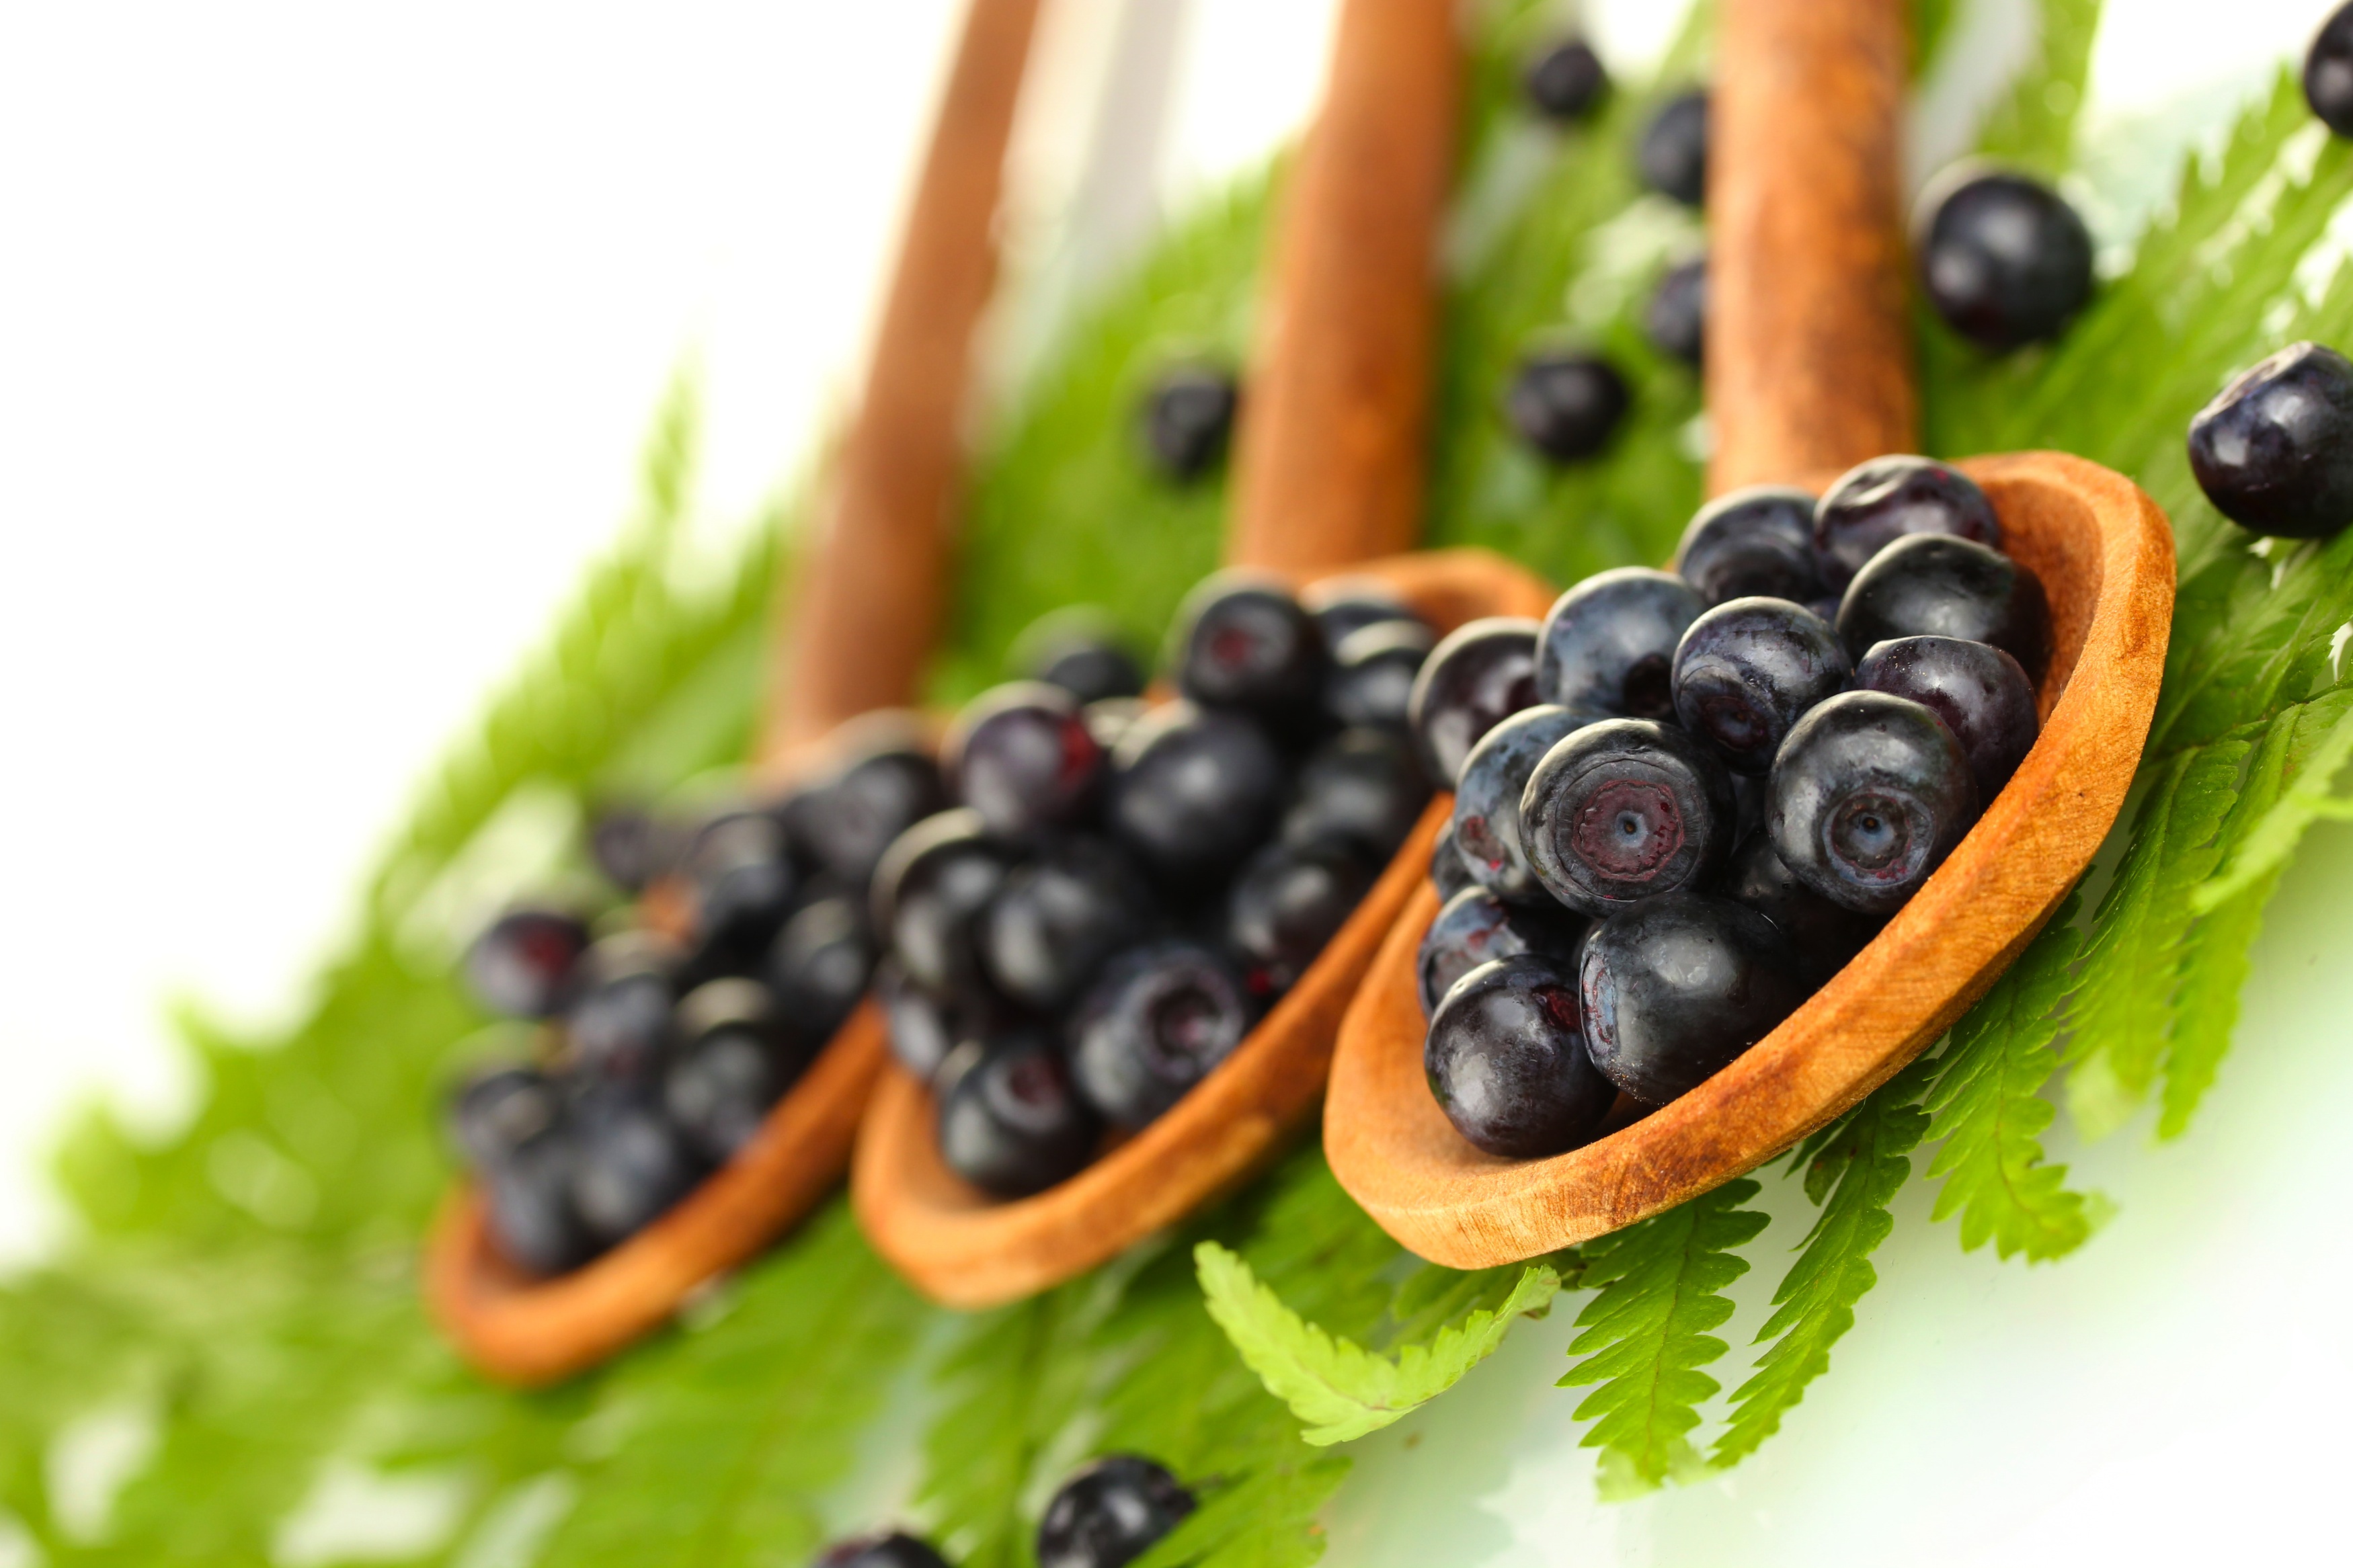 Tasty blueberries in wooden spoons on fern close-up-shutterstock_115553890